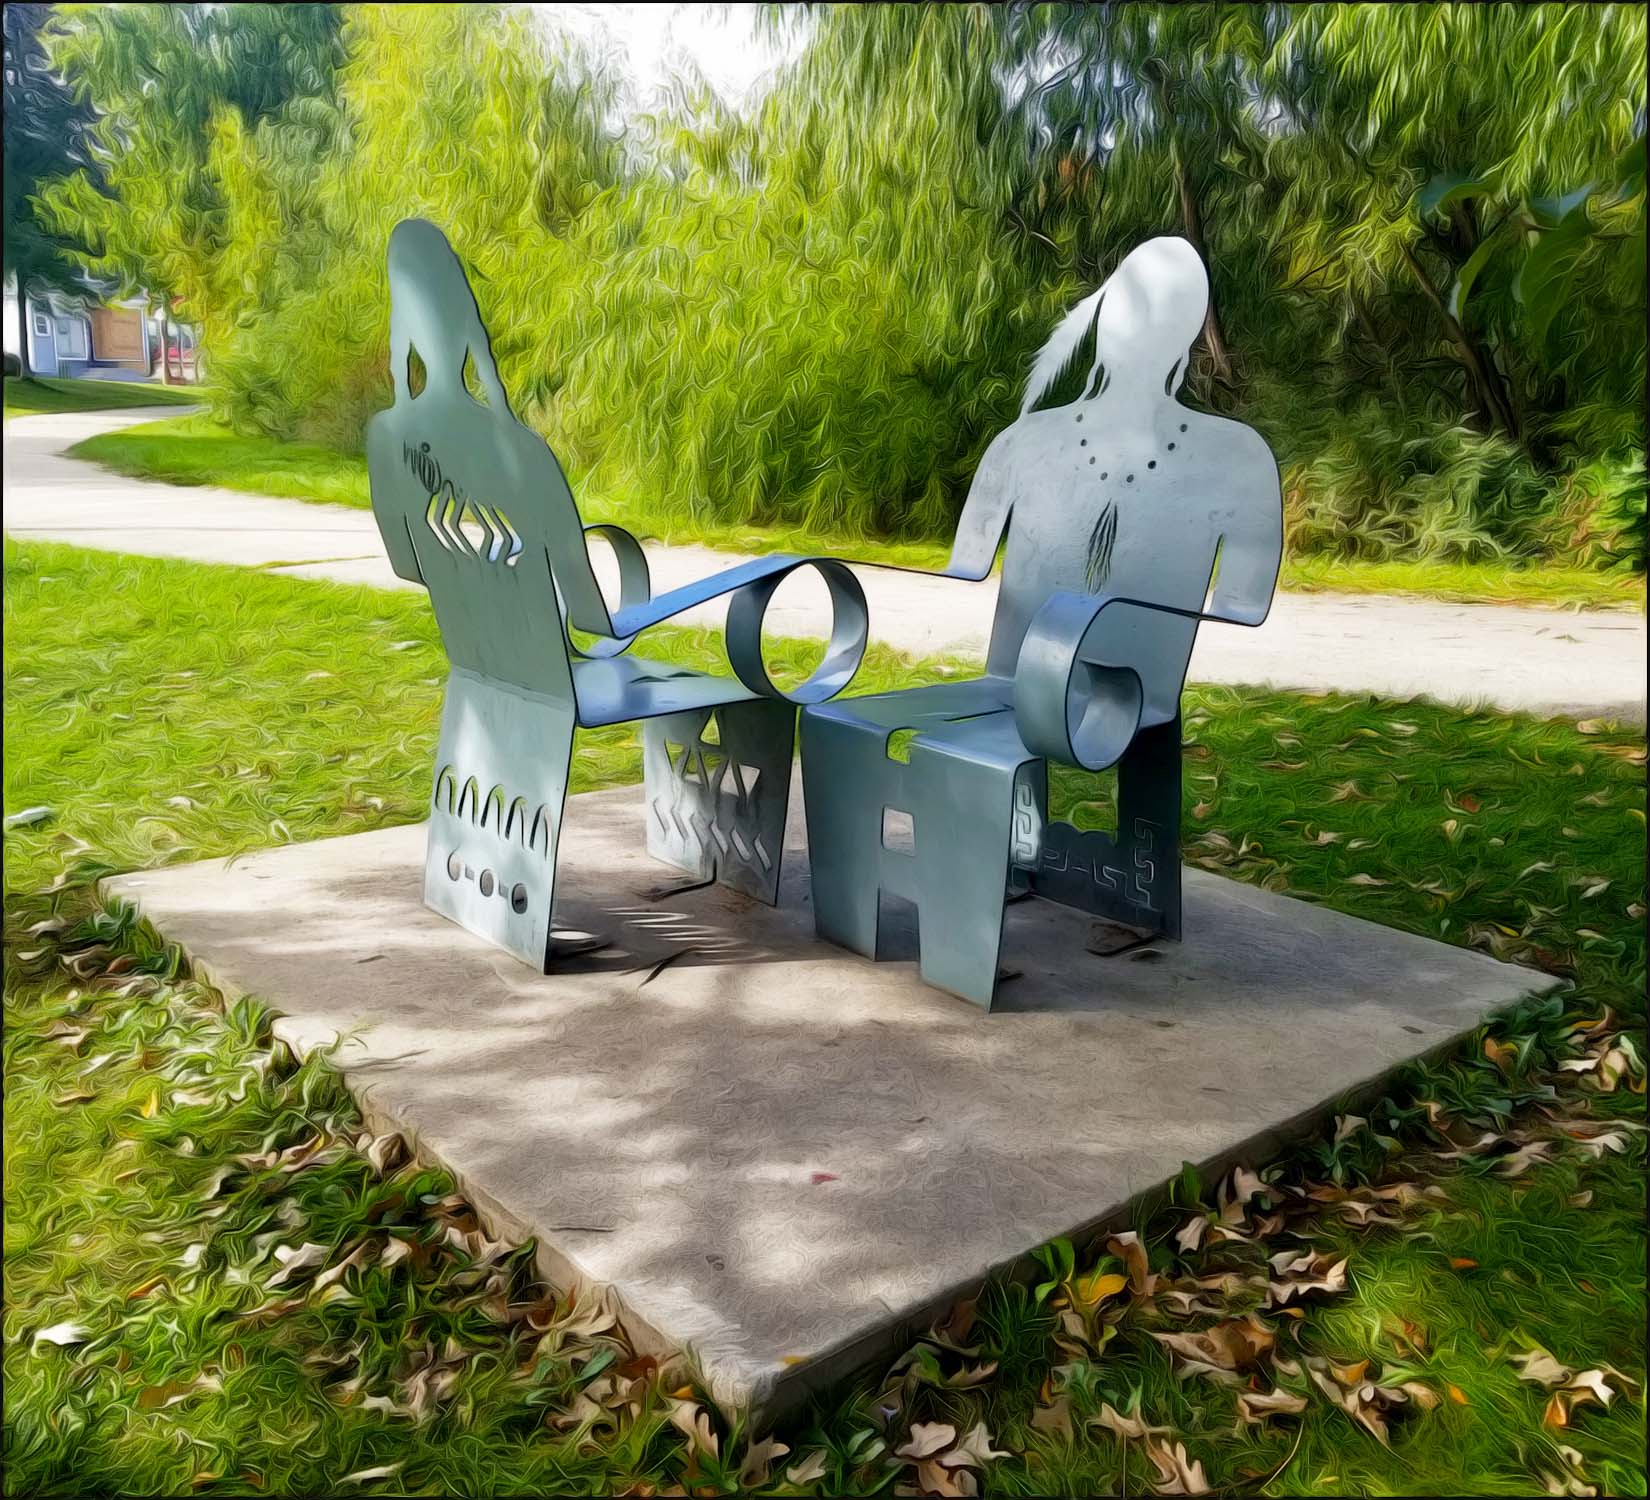 Kościuszko Park covers 33.5 acres on the southside of Milwaukee. Modern artwork adorns the park’s southeast corner.